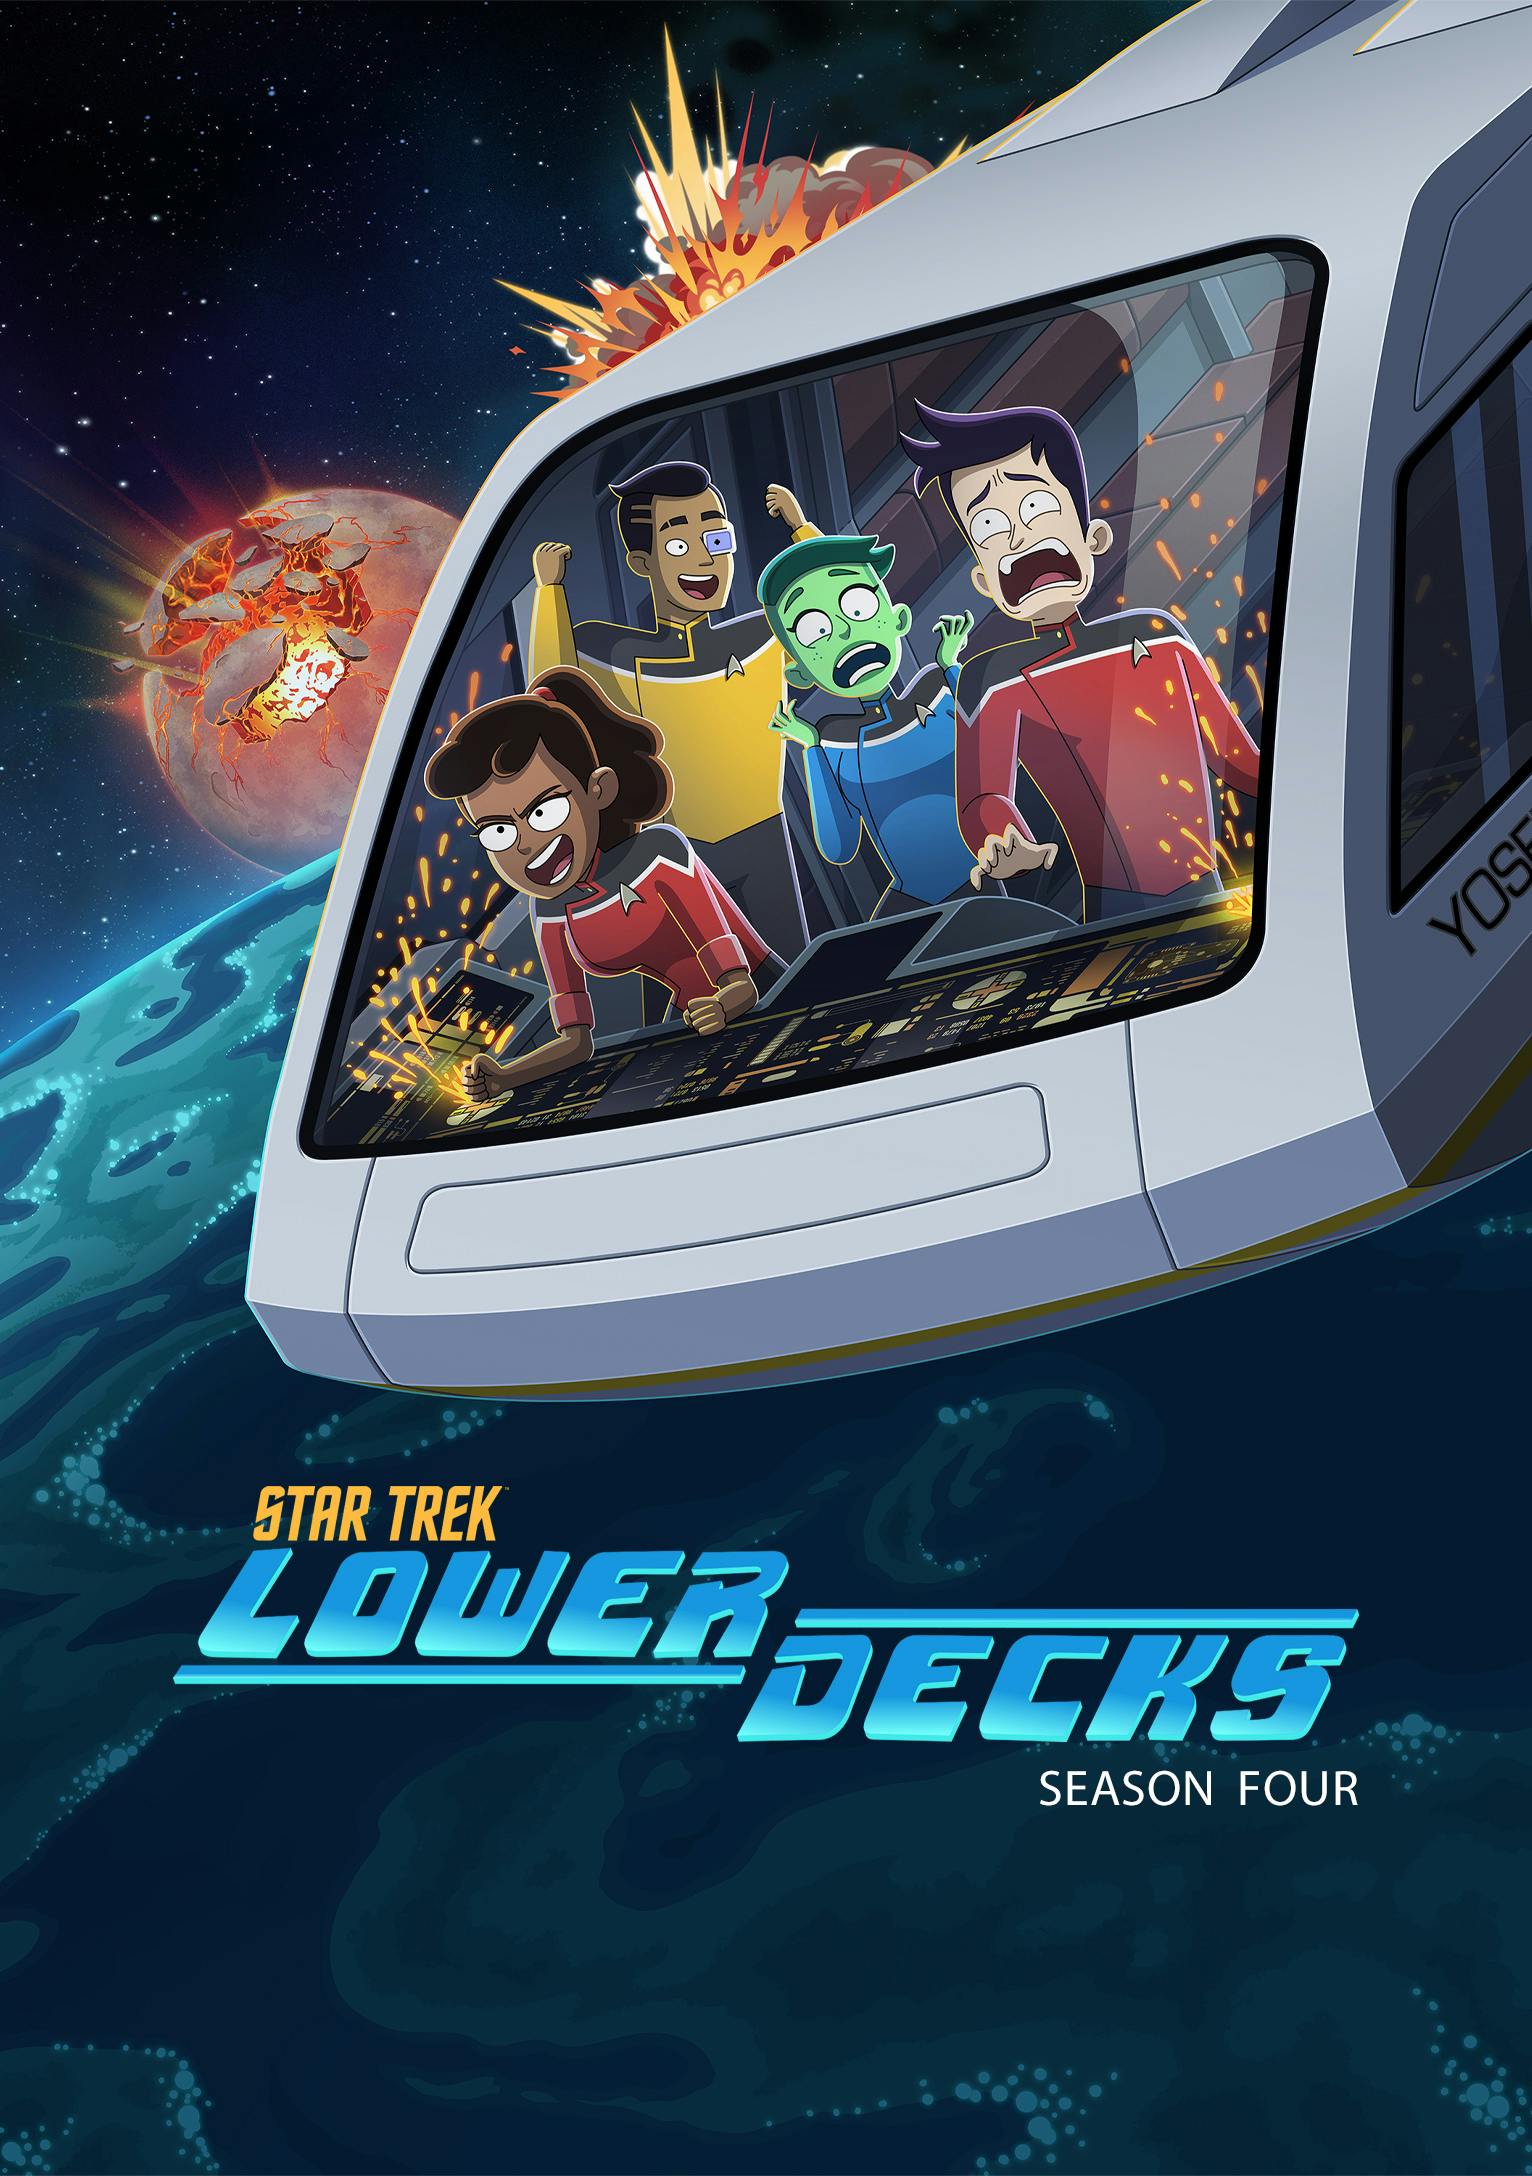 Star Trek: Lower Decks Season 4 Home Entertainment Digital packshot